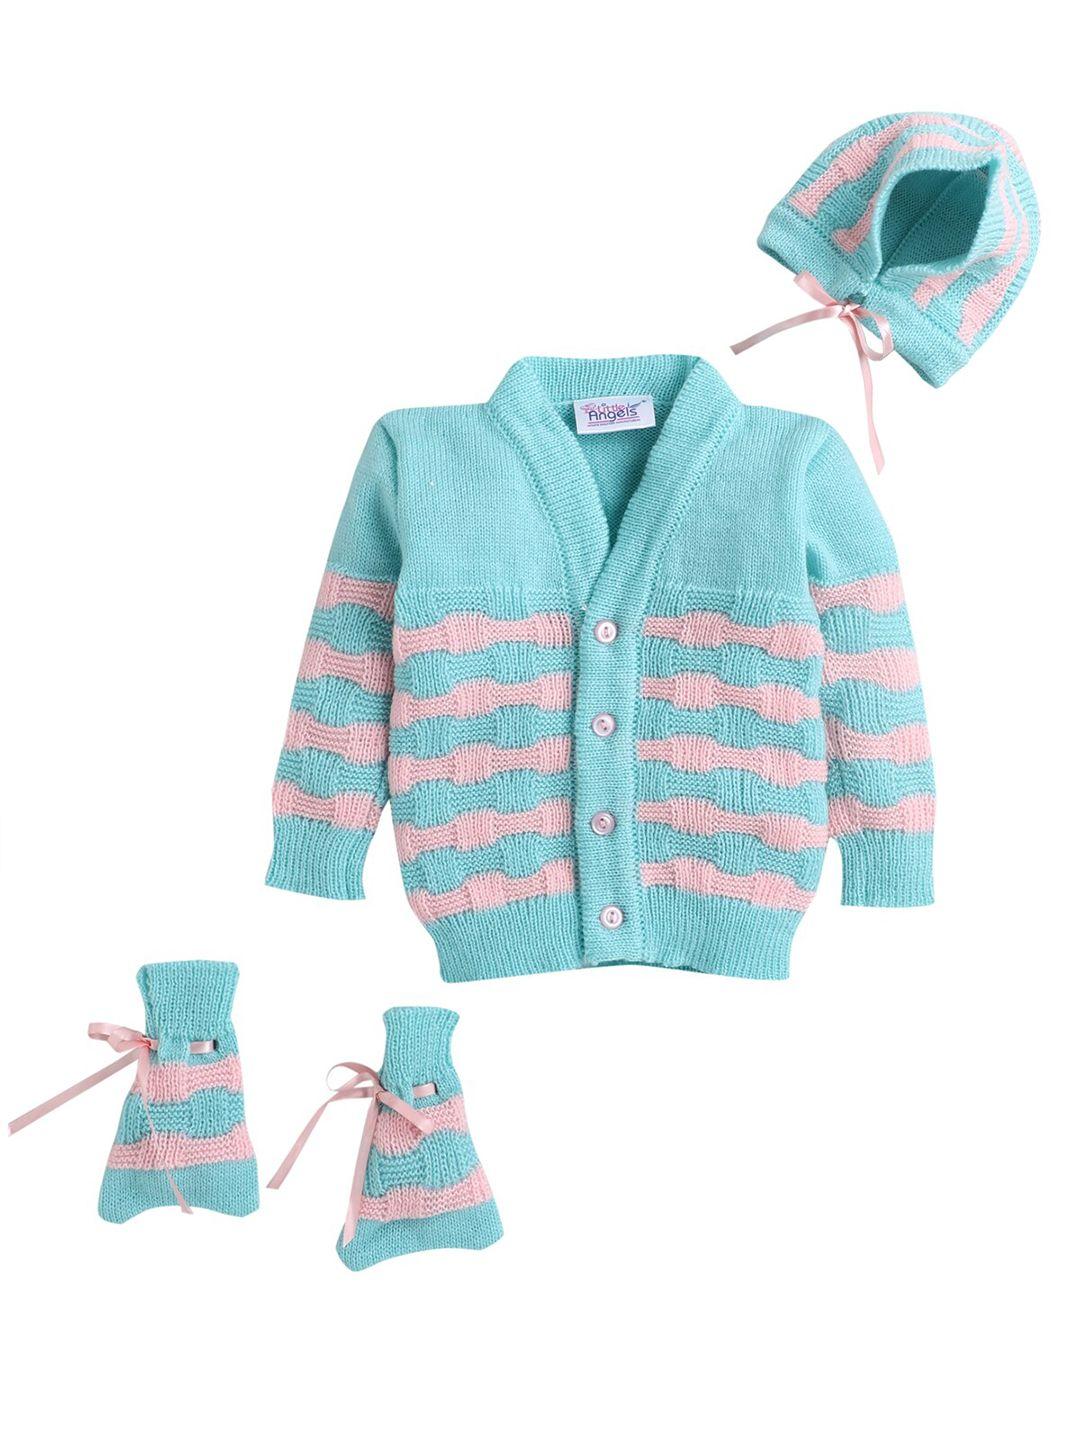 little angels unisex kids sea green & pink striped acrylic cardigan sweater set